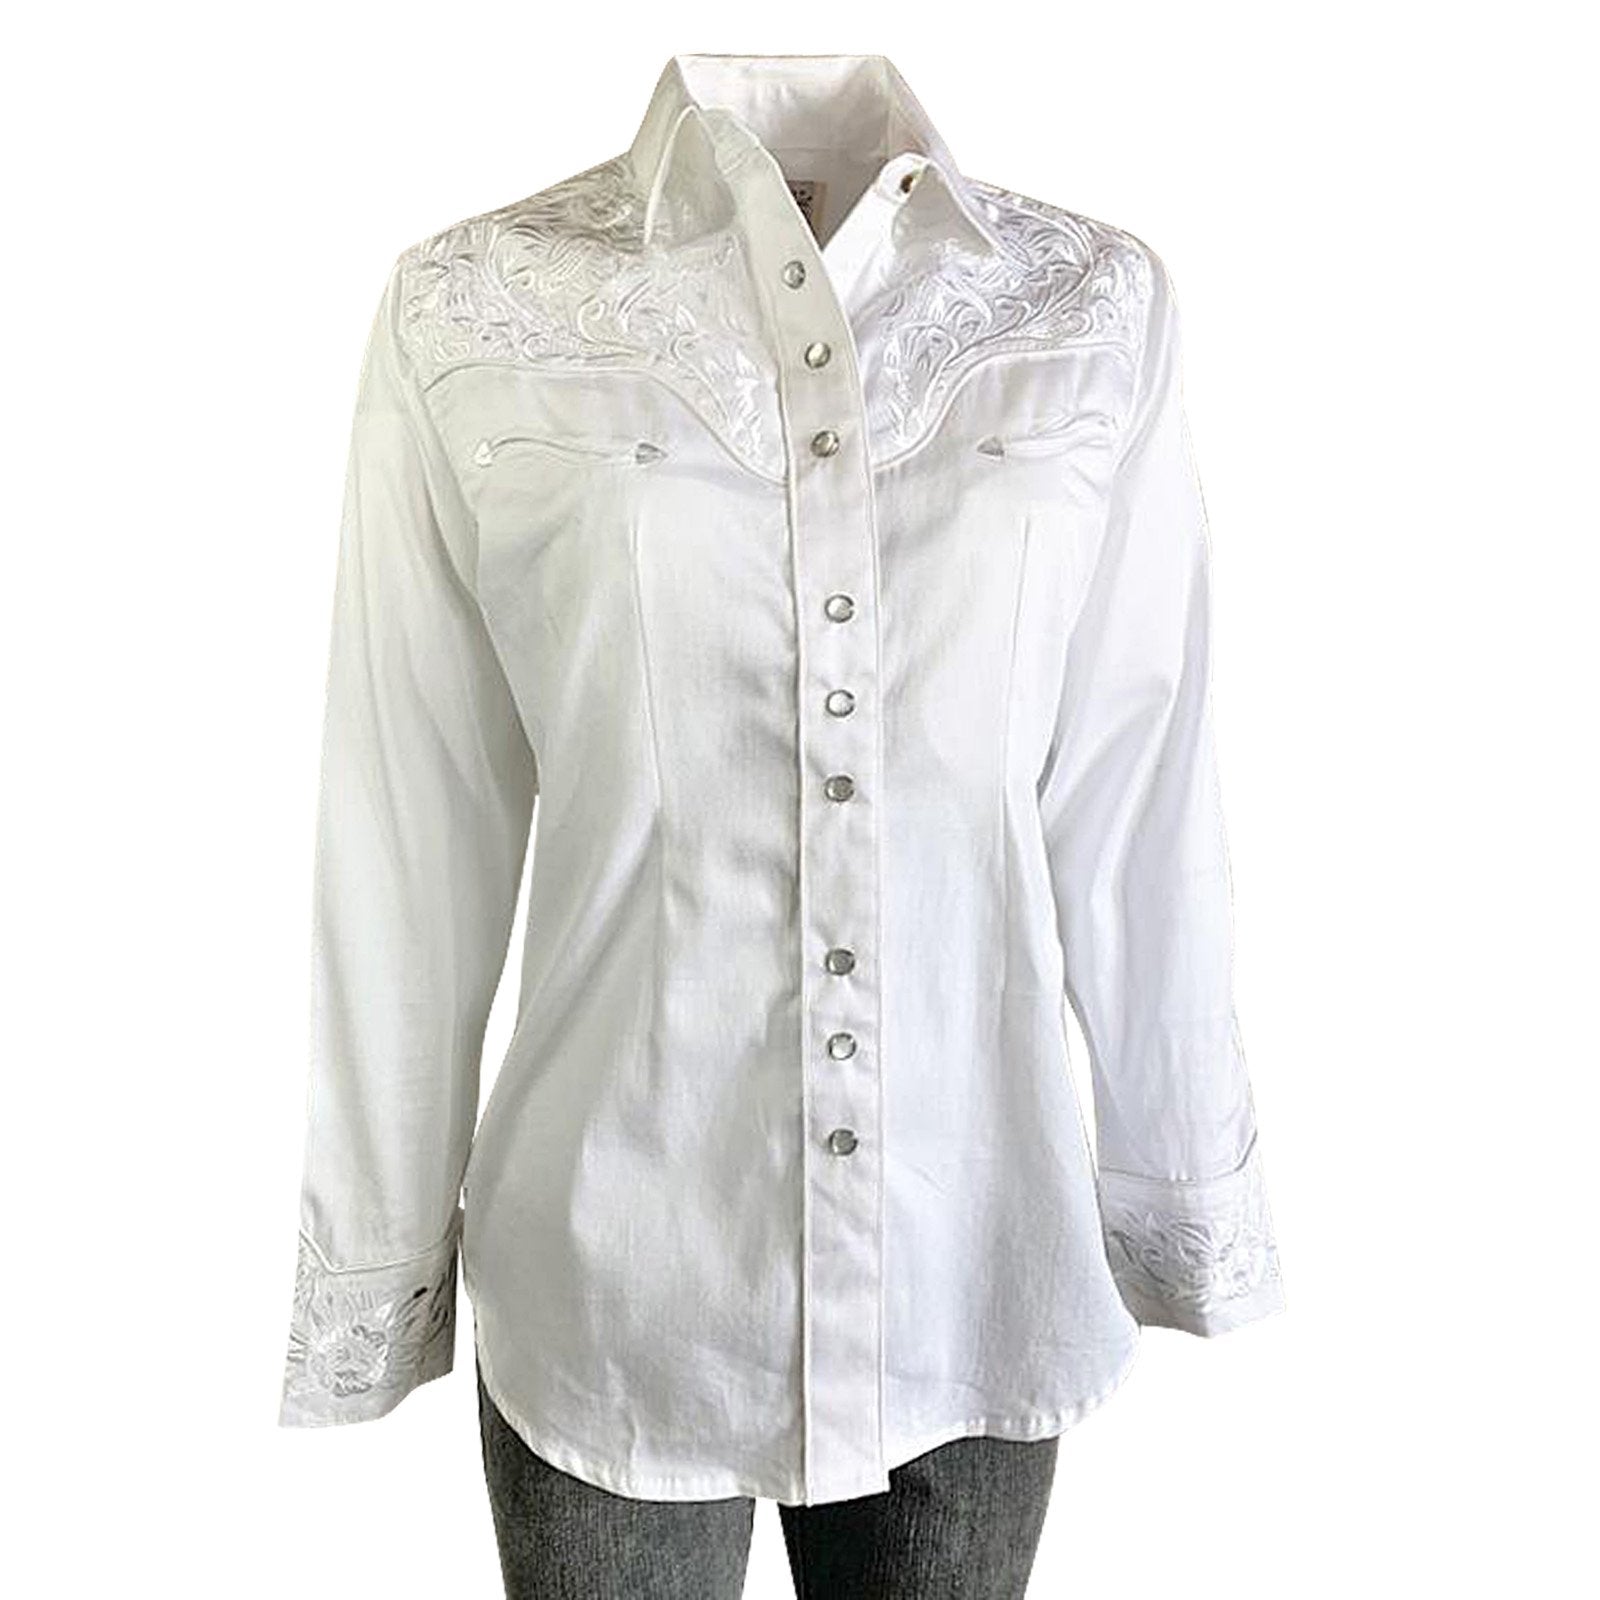 Rockmount Ranch Wear Women's Vintage Western Shirt White Front #177859